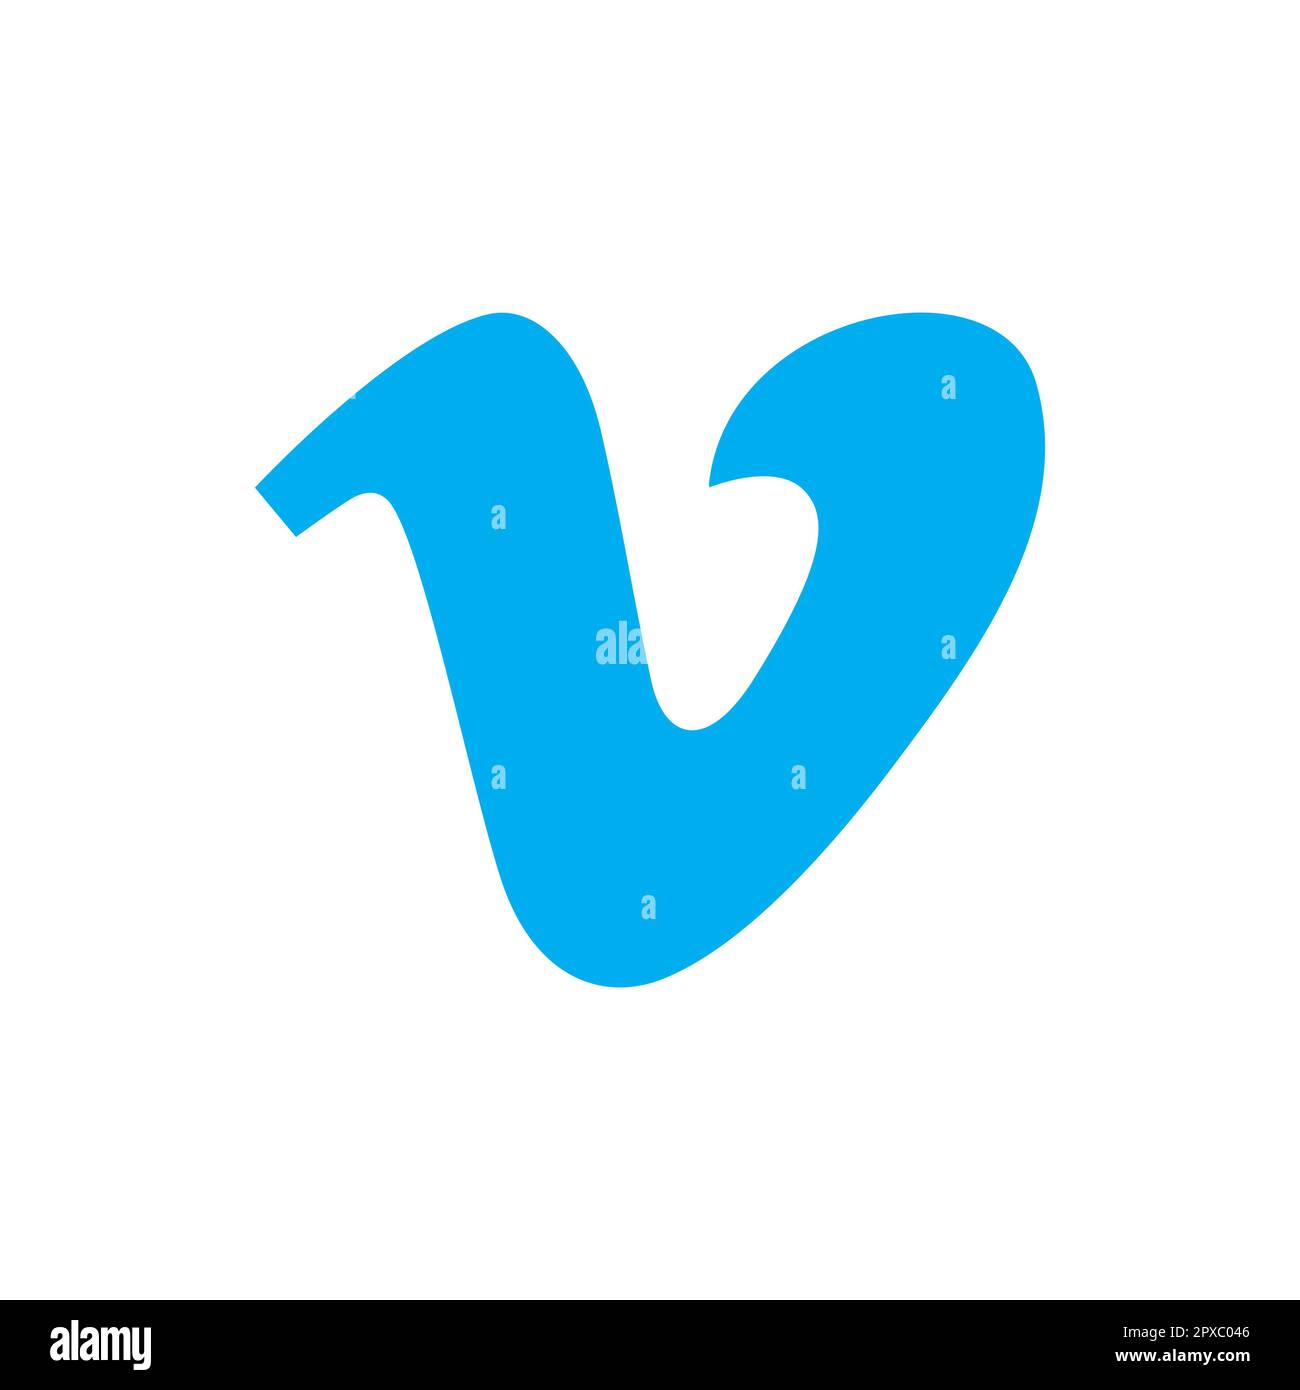 Vinnytsia, Ukraine - May 1, 2023. Popular Vimeo social network logo icon, isolated white background, media editorial vector illustration Stock Vector